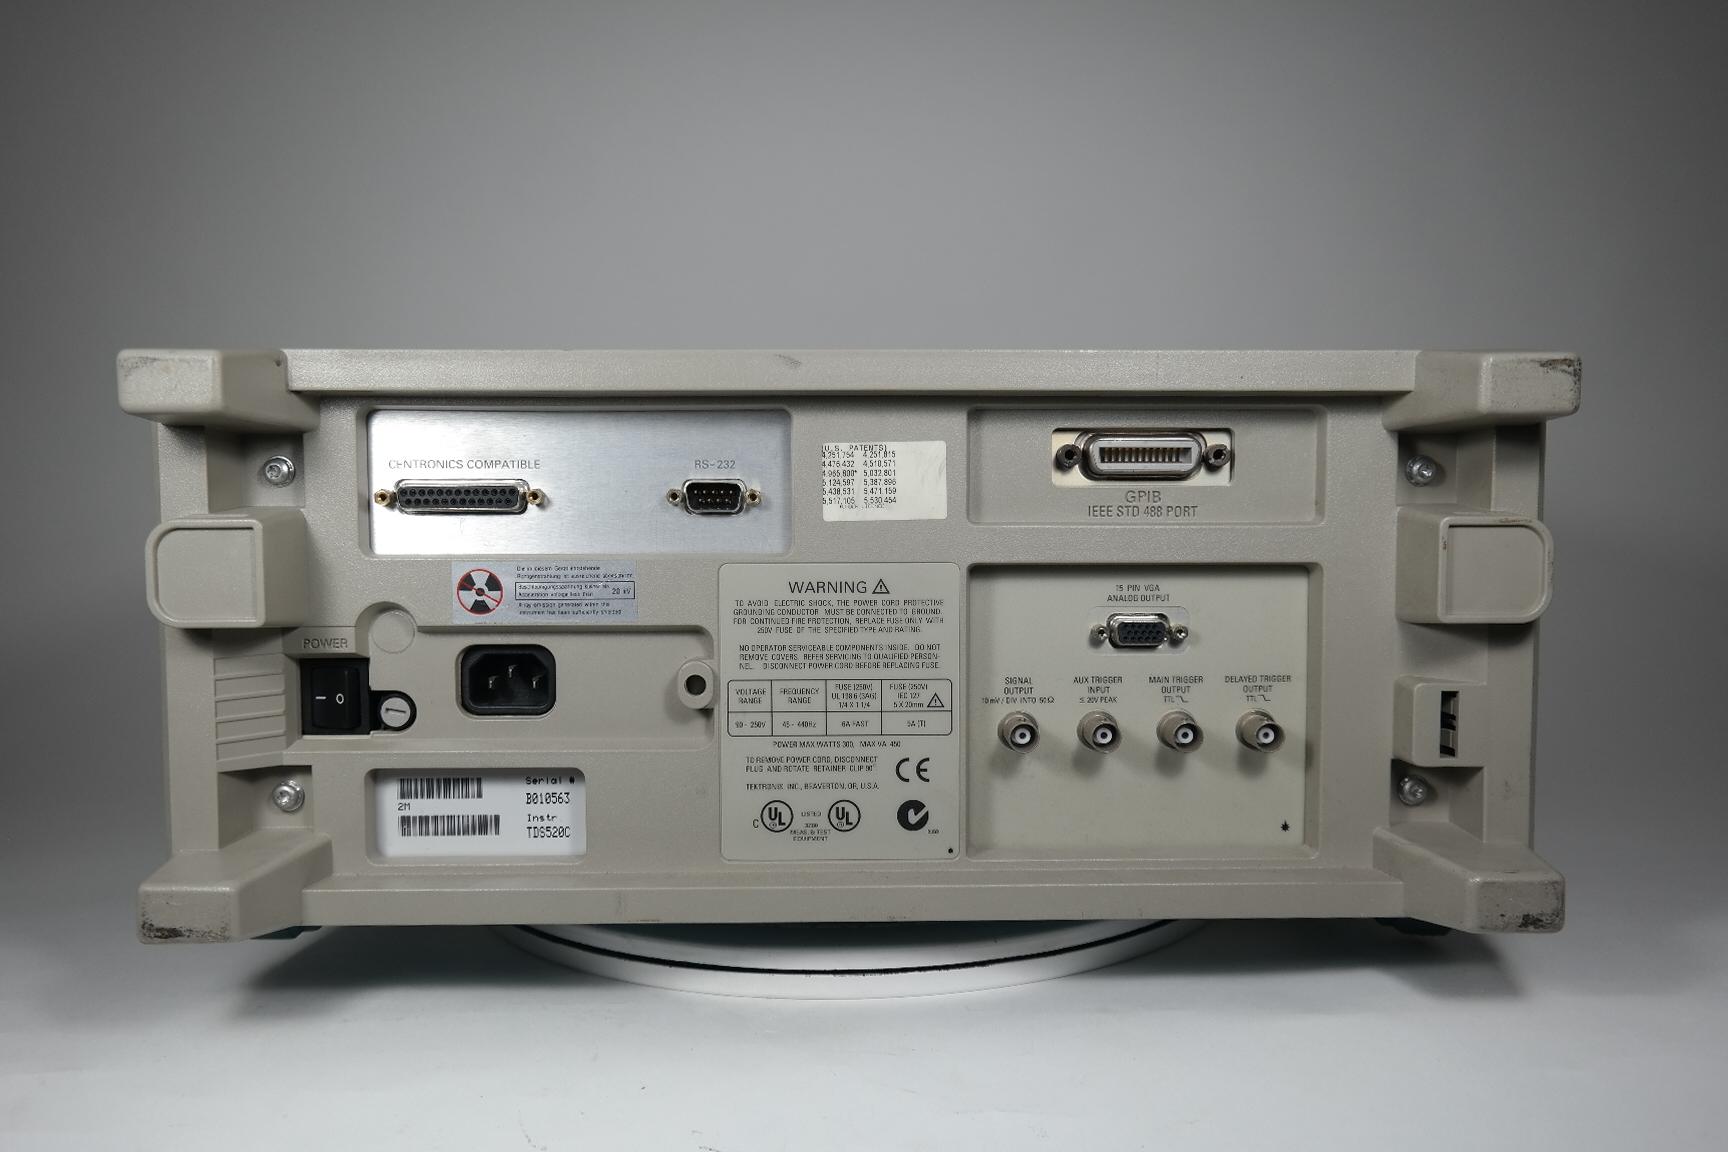 Tektronix/Oscilloscope Digital/TDS520C